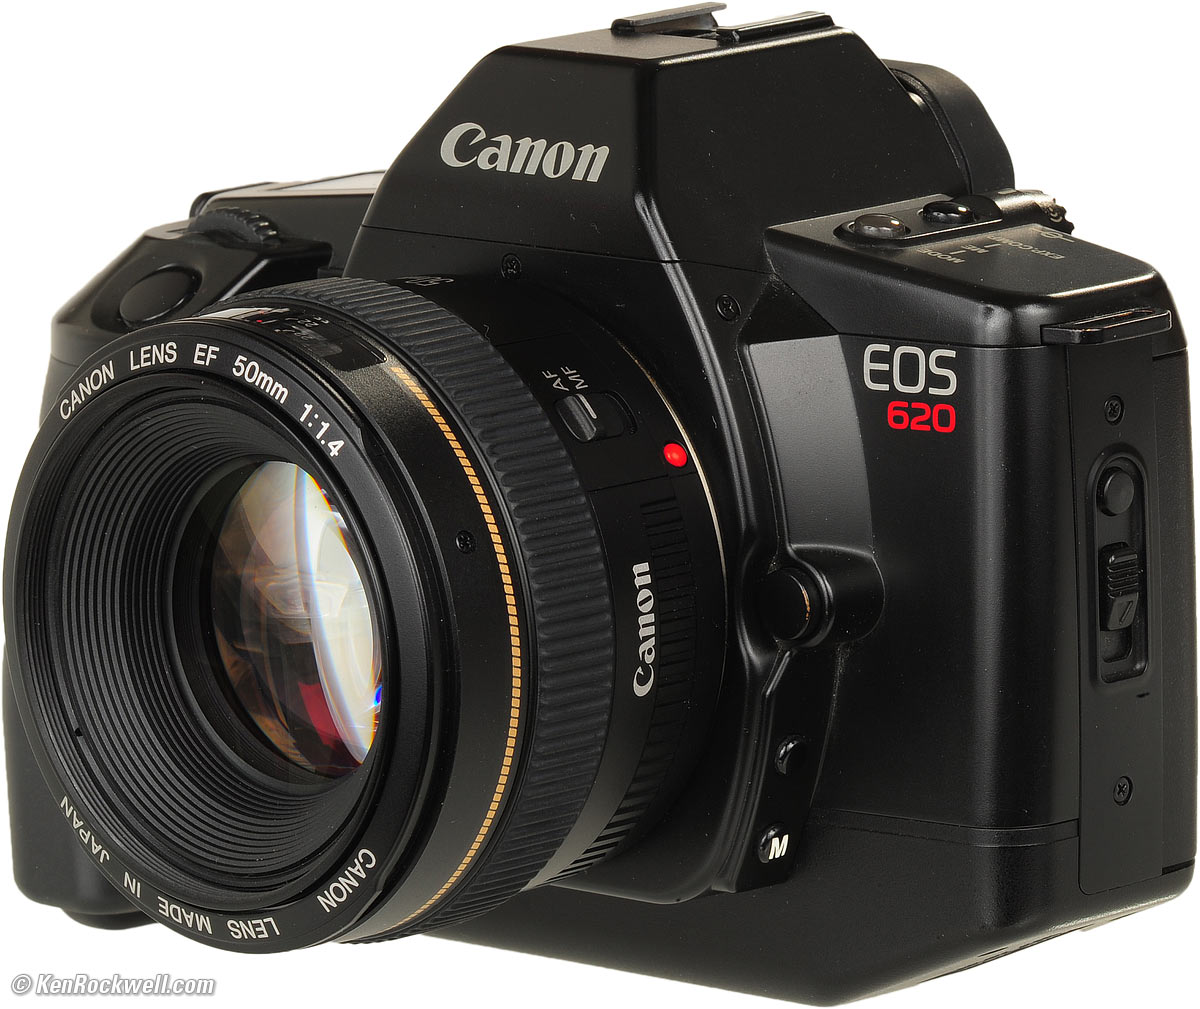 Canon Ae 1 Program Exposure Preview